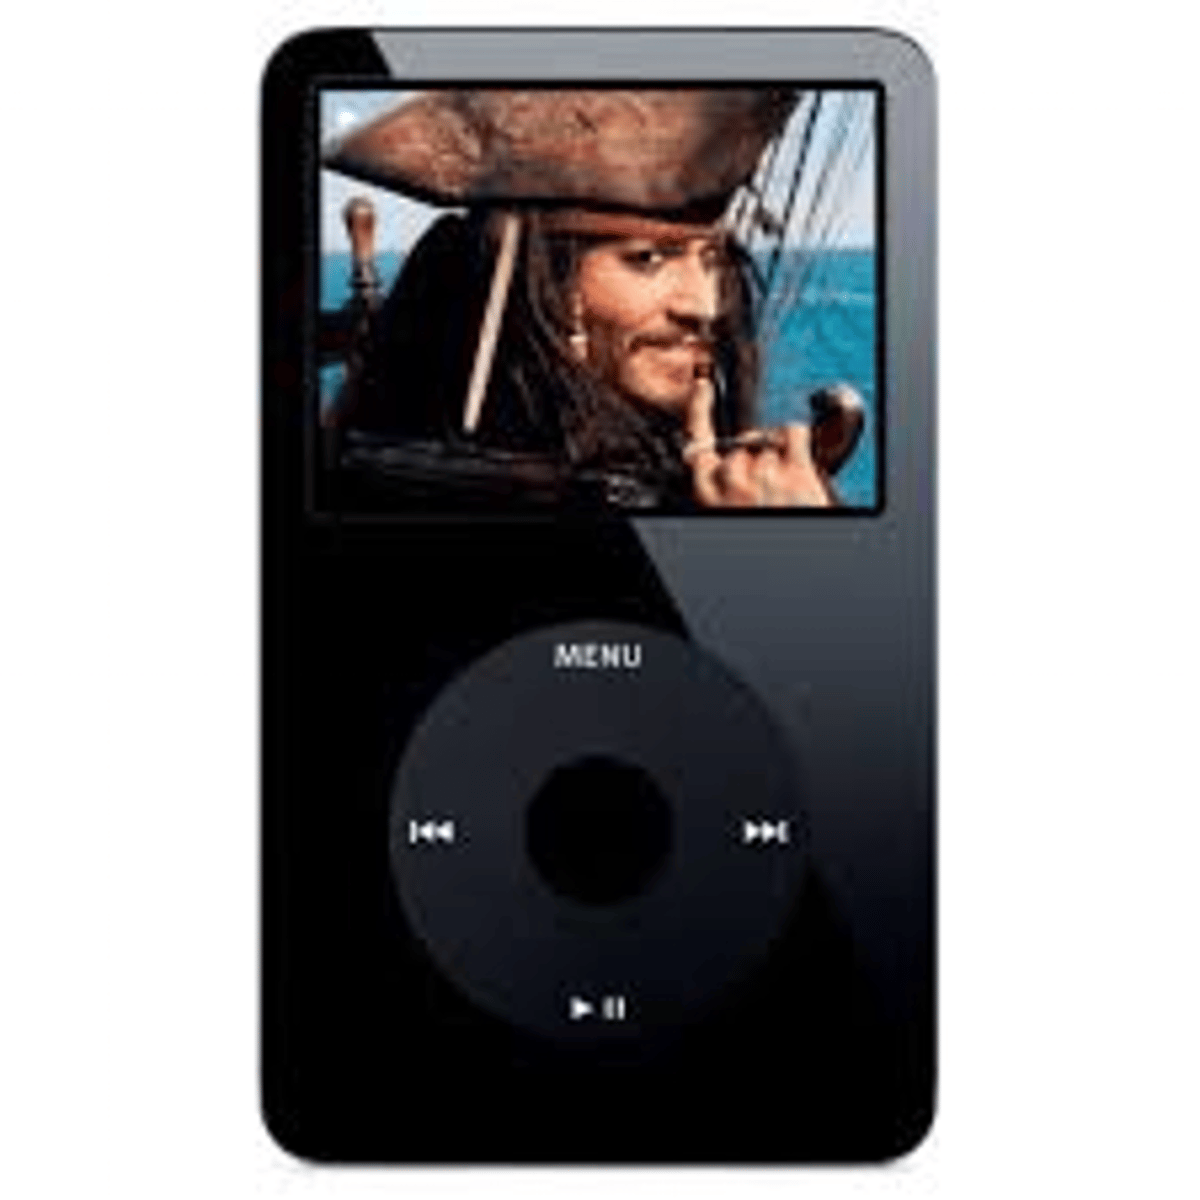 iPod classic (5.5 gen)